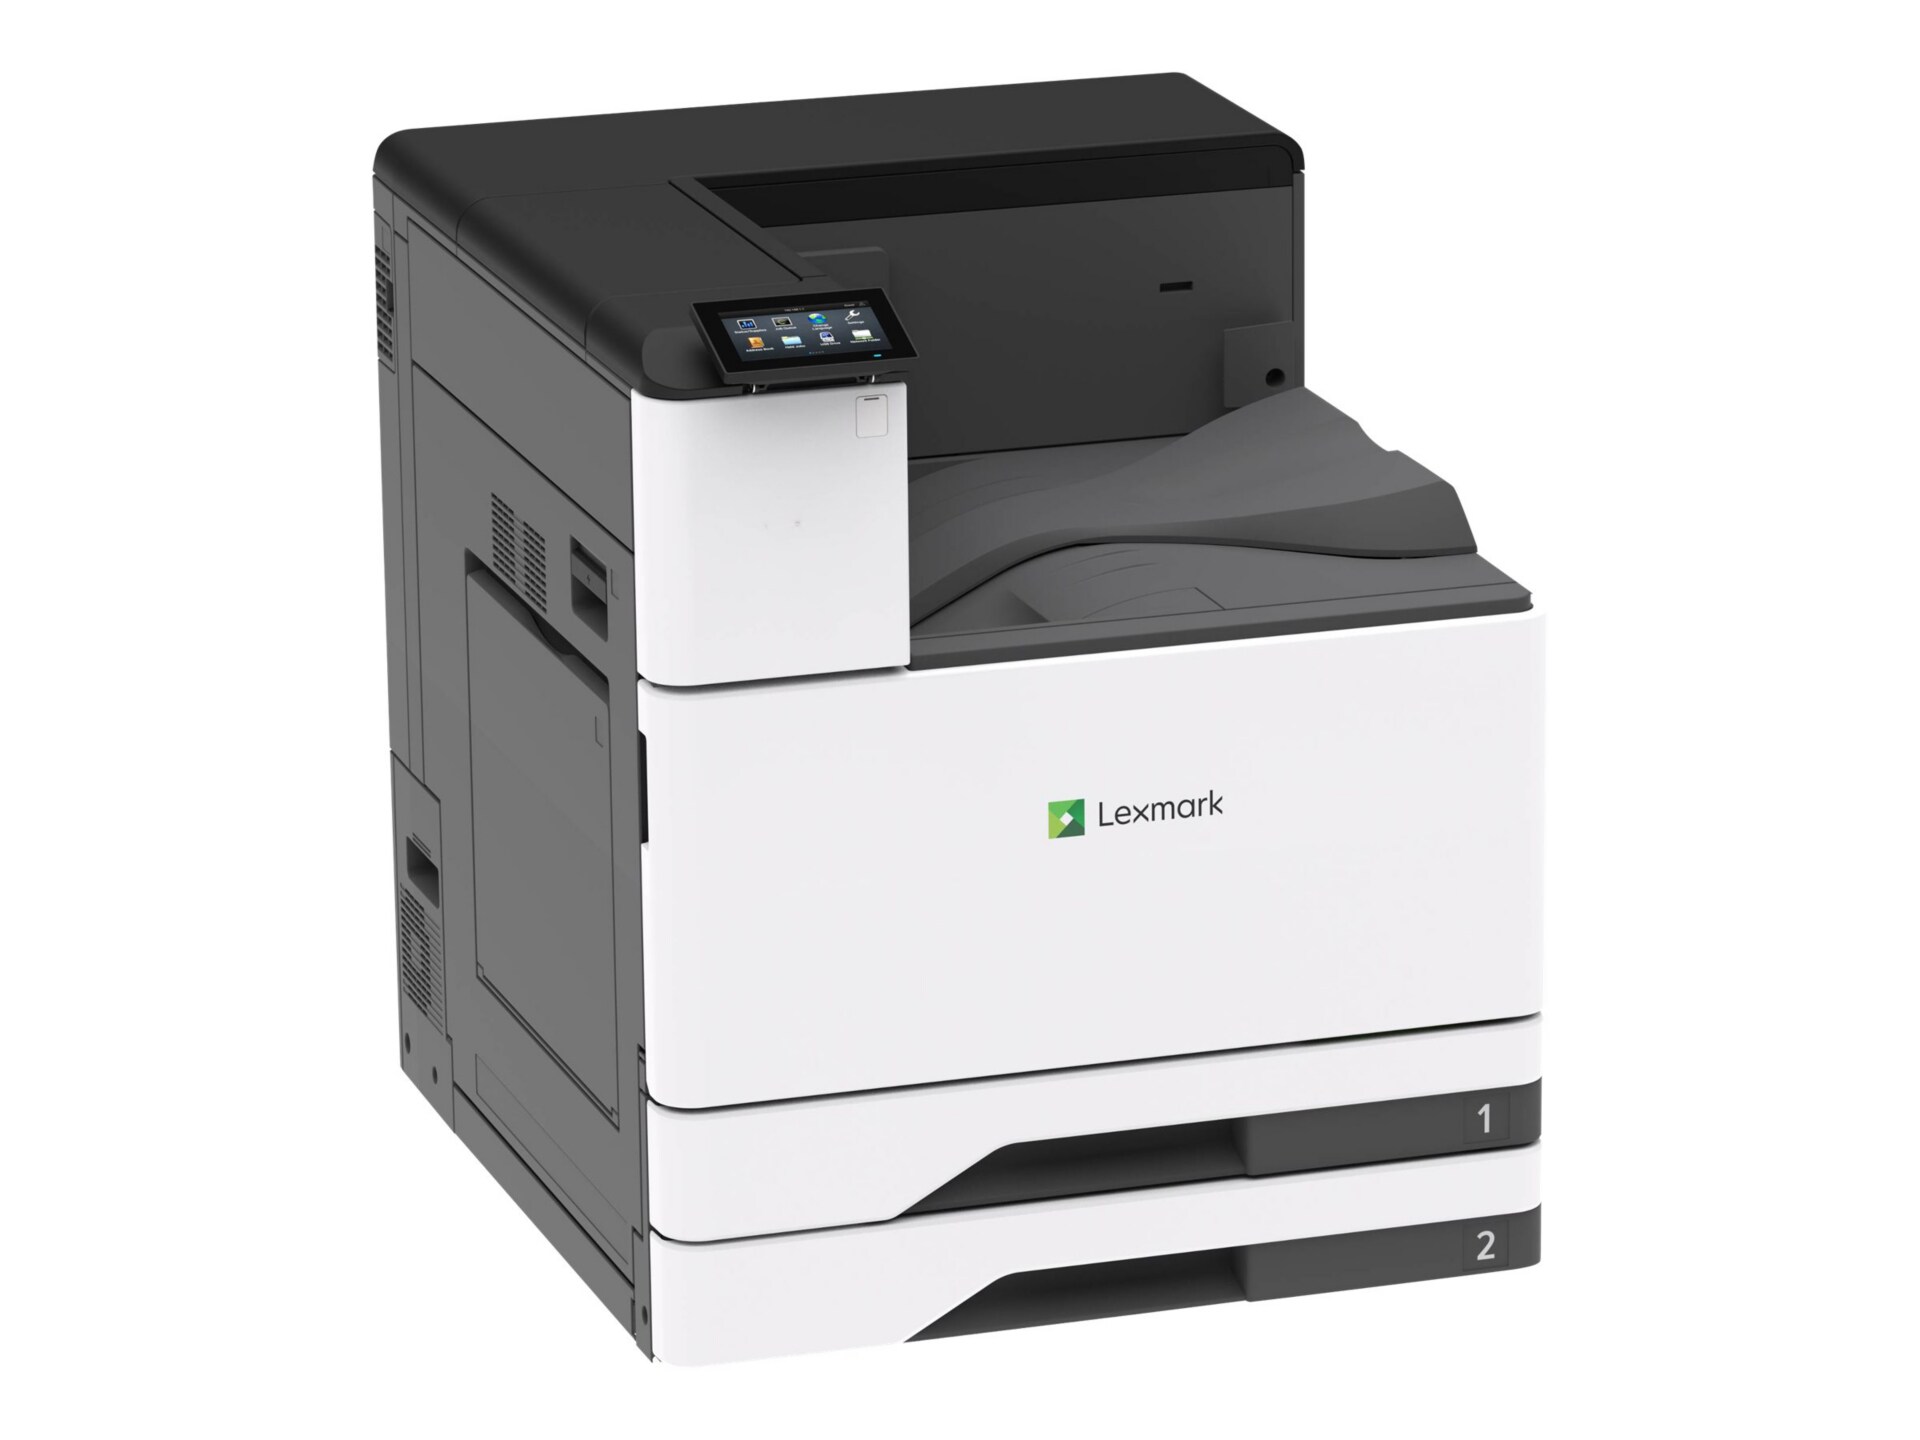  Lexmark Impresora láser a color CS923DE - 1200 x 1200 ppm - 55  ppm - A3, A4, Legal, Letra - 1150 hojas, dúplex - 32C0001 : Productos de  Oficina